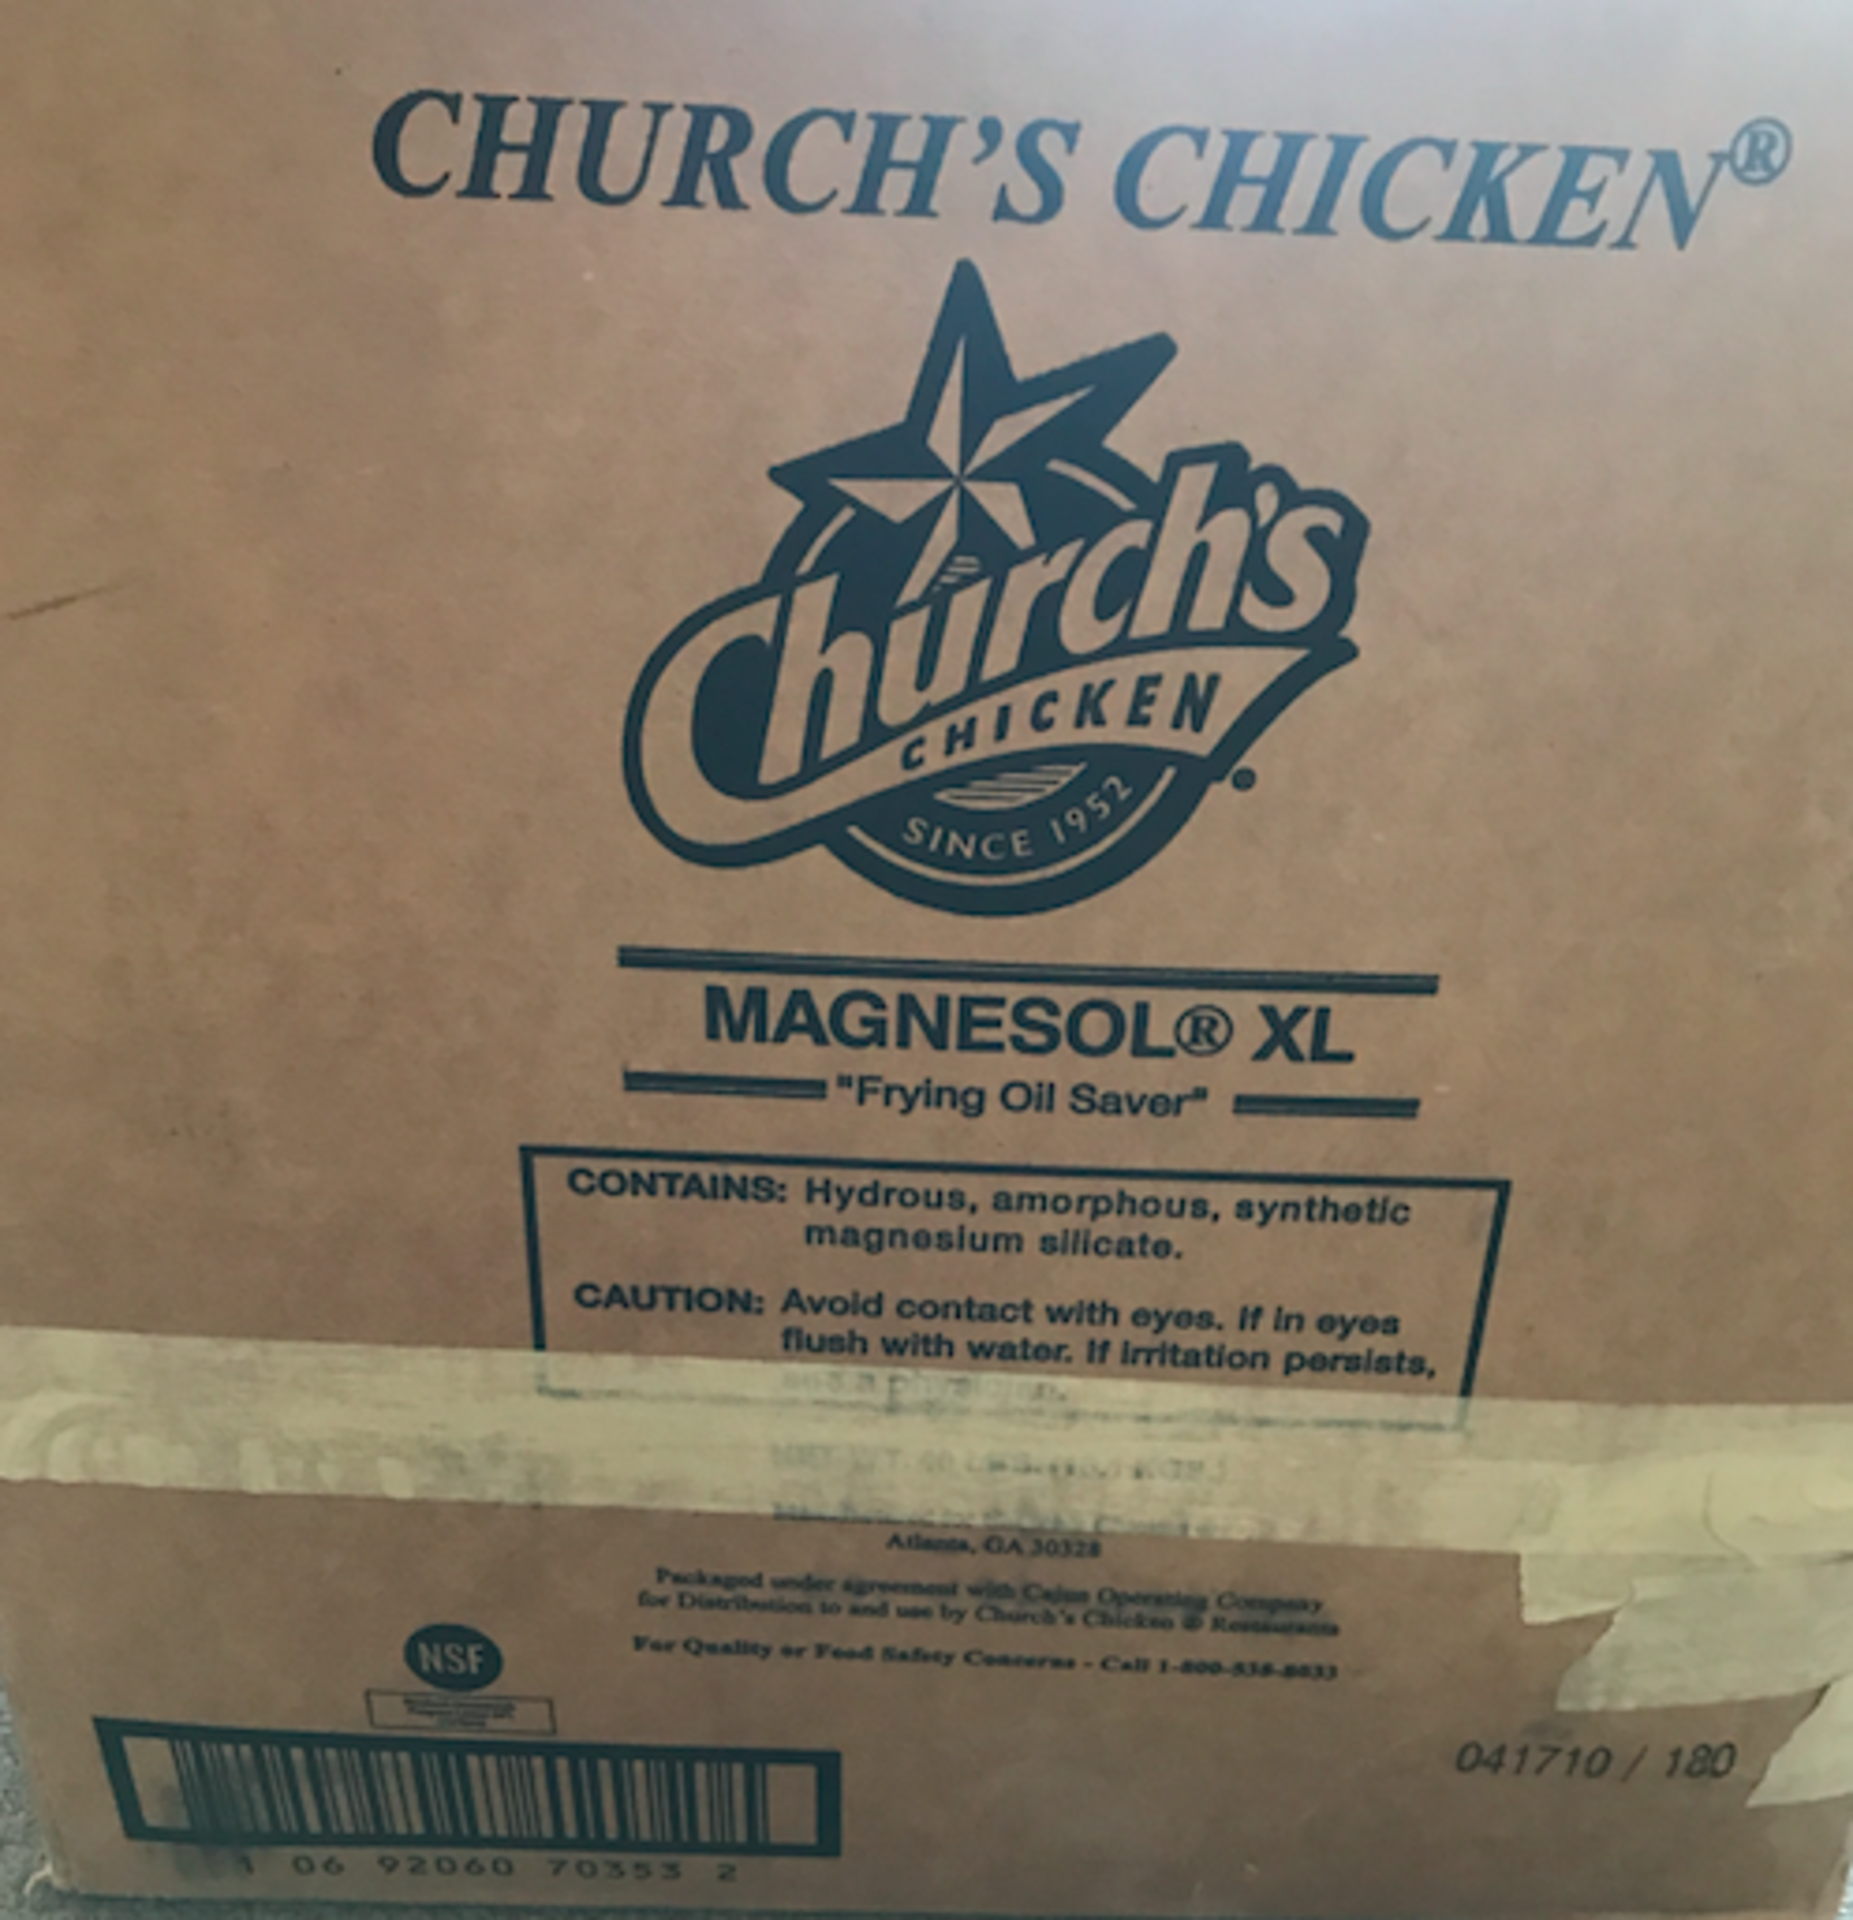 CHURCH'S CHICKEN MAGNESOL XL FRYING OIL SAVER 40LBS